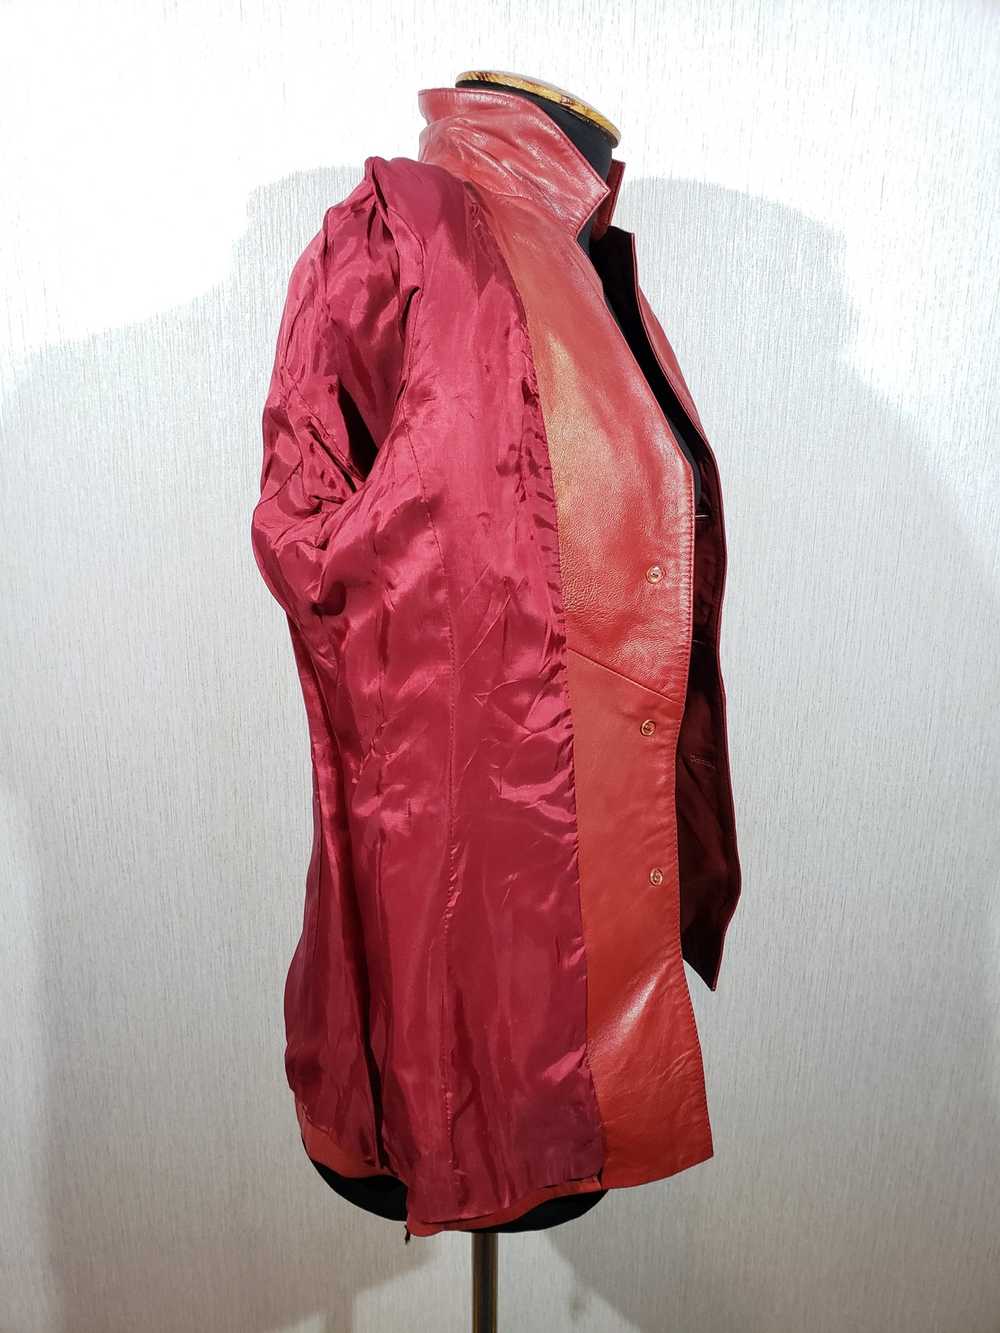 Designer × Genuine Leather Stylish red women's le… - image 7